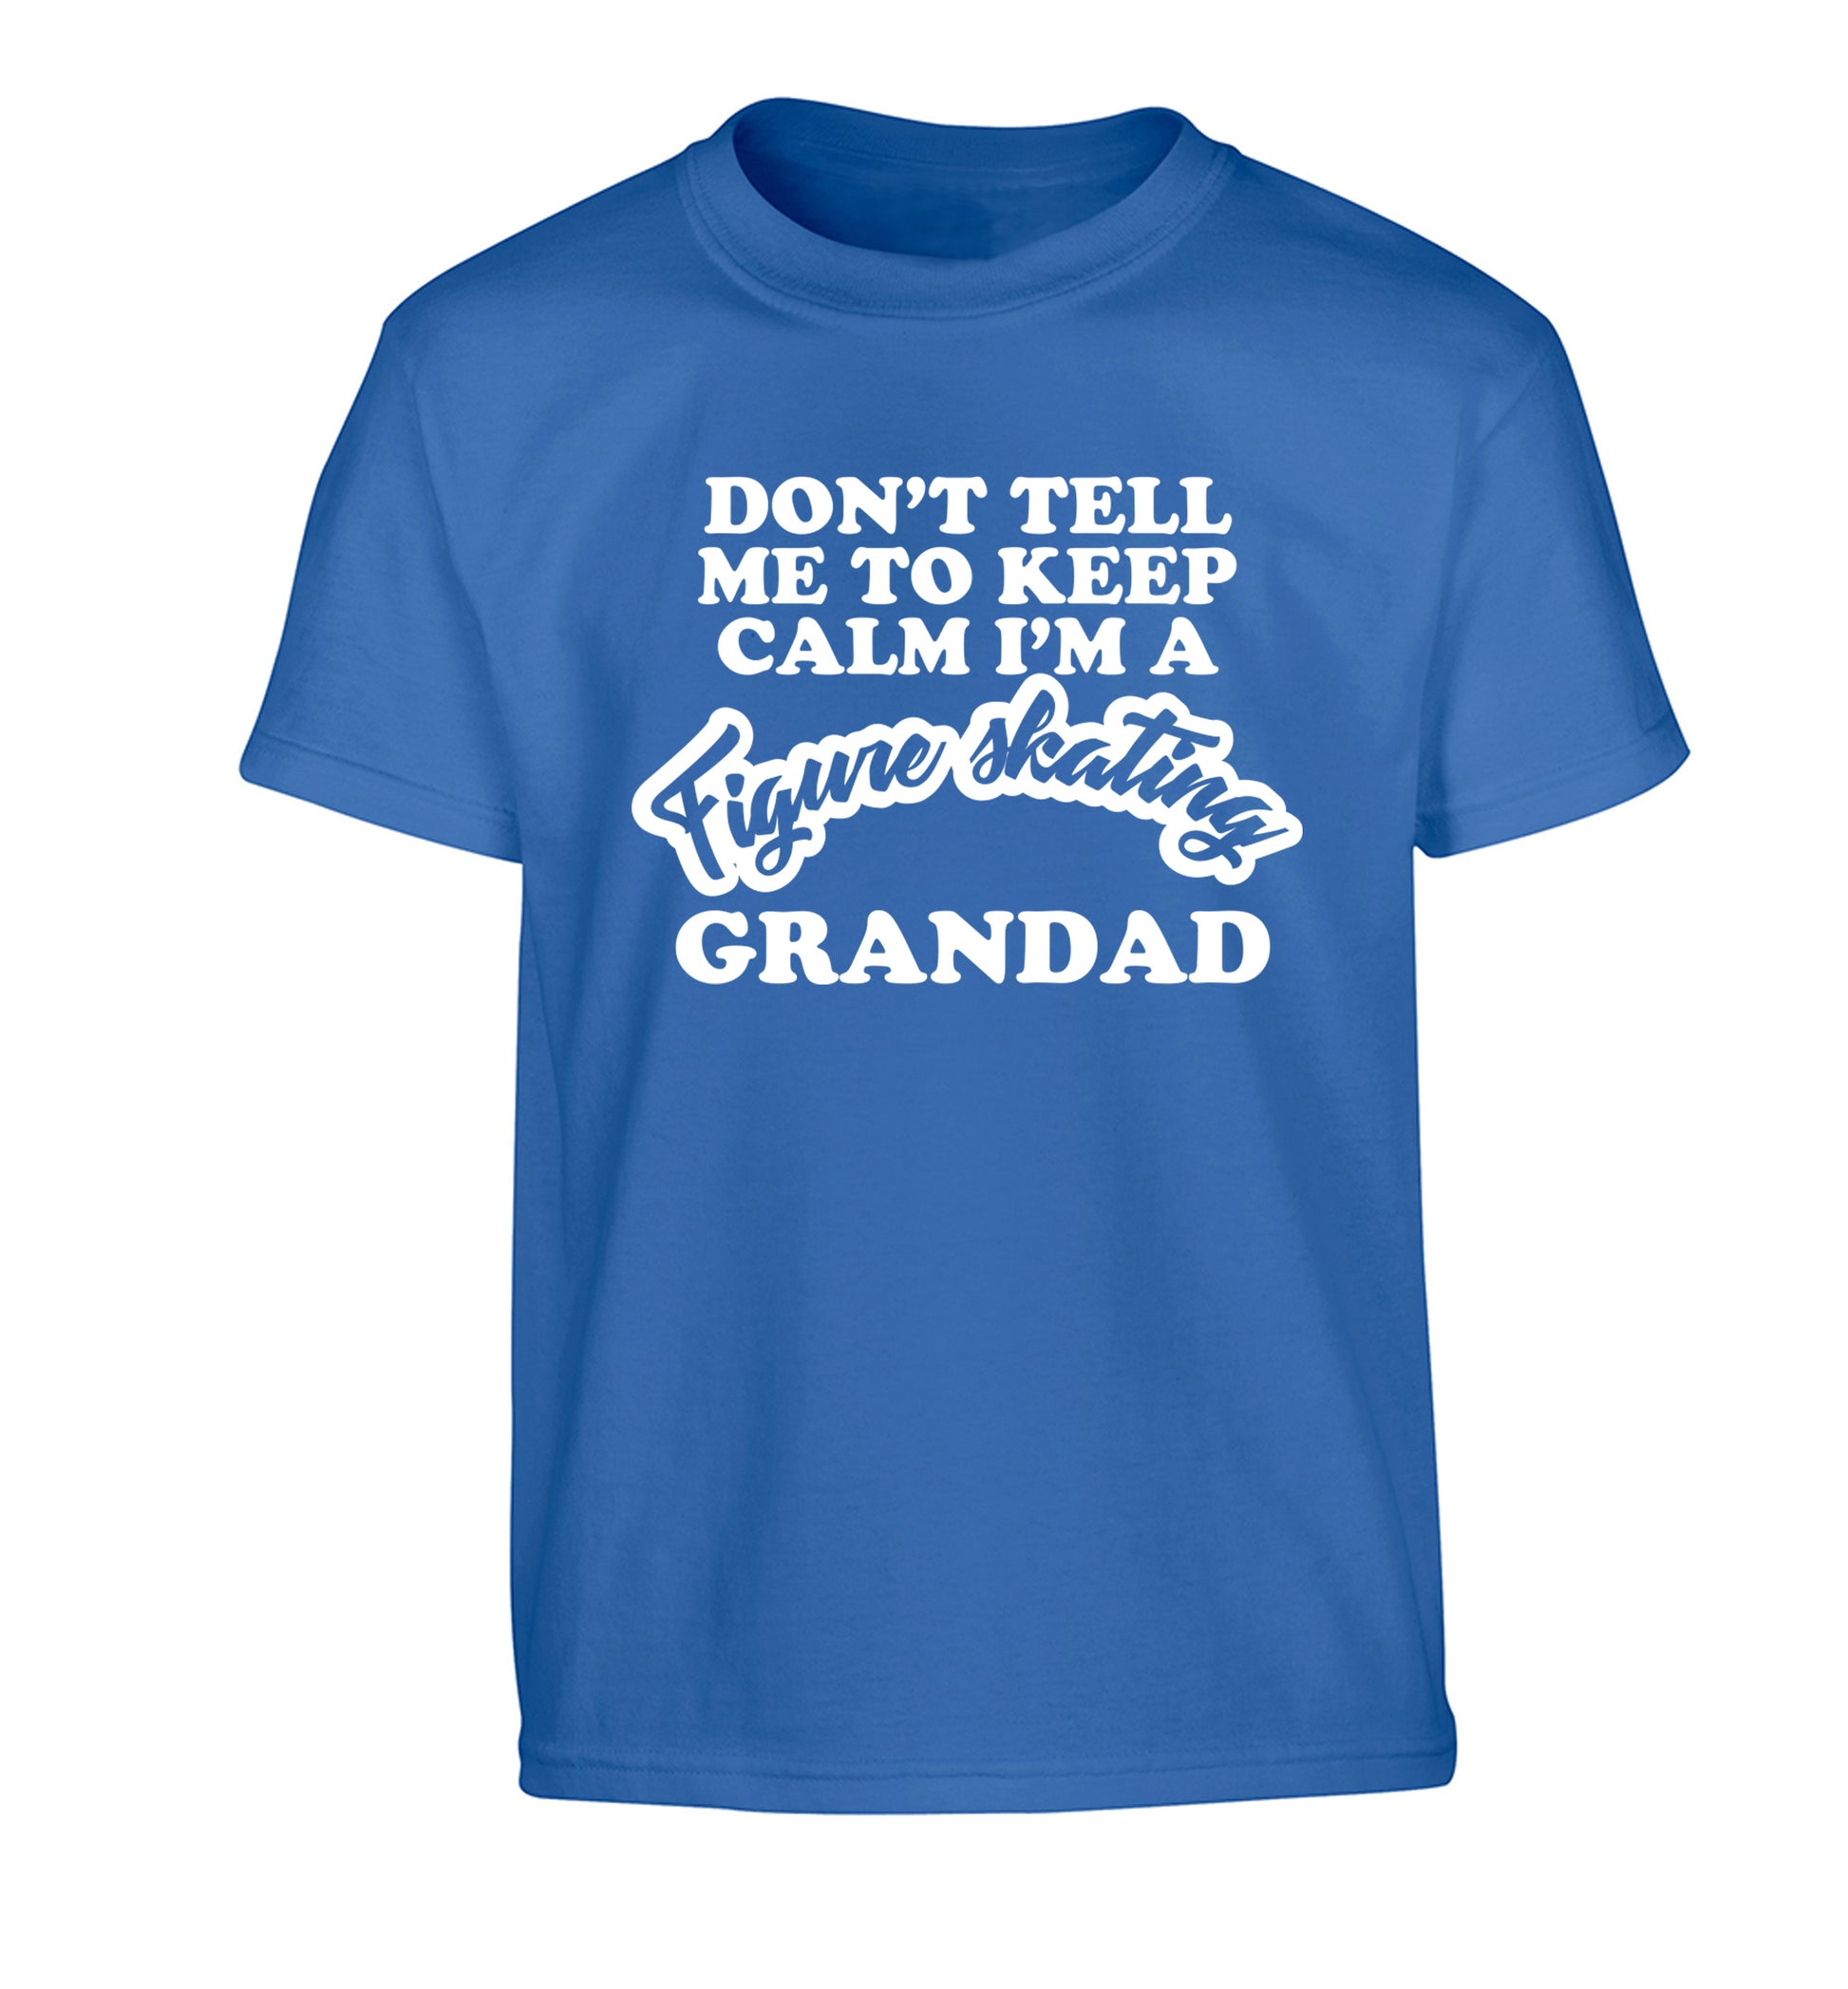 Don't tell me to keep calm I'm a figure skating grandad Children's blue Tshirt 12-14 Years